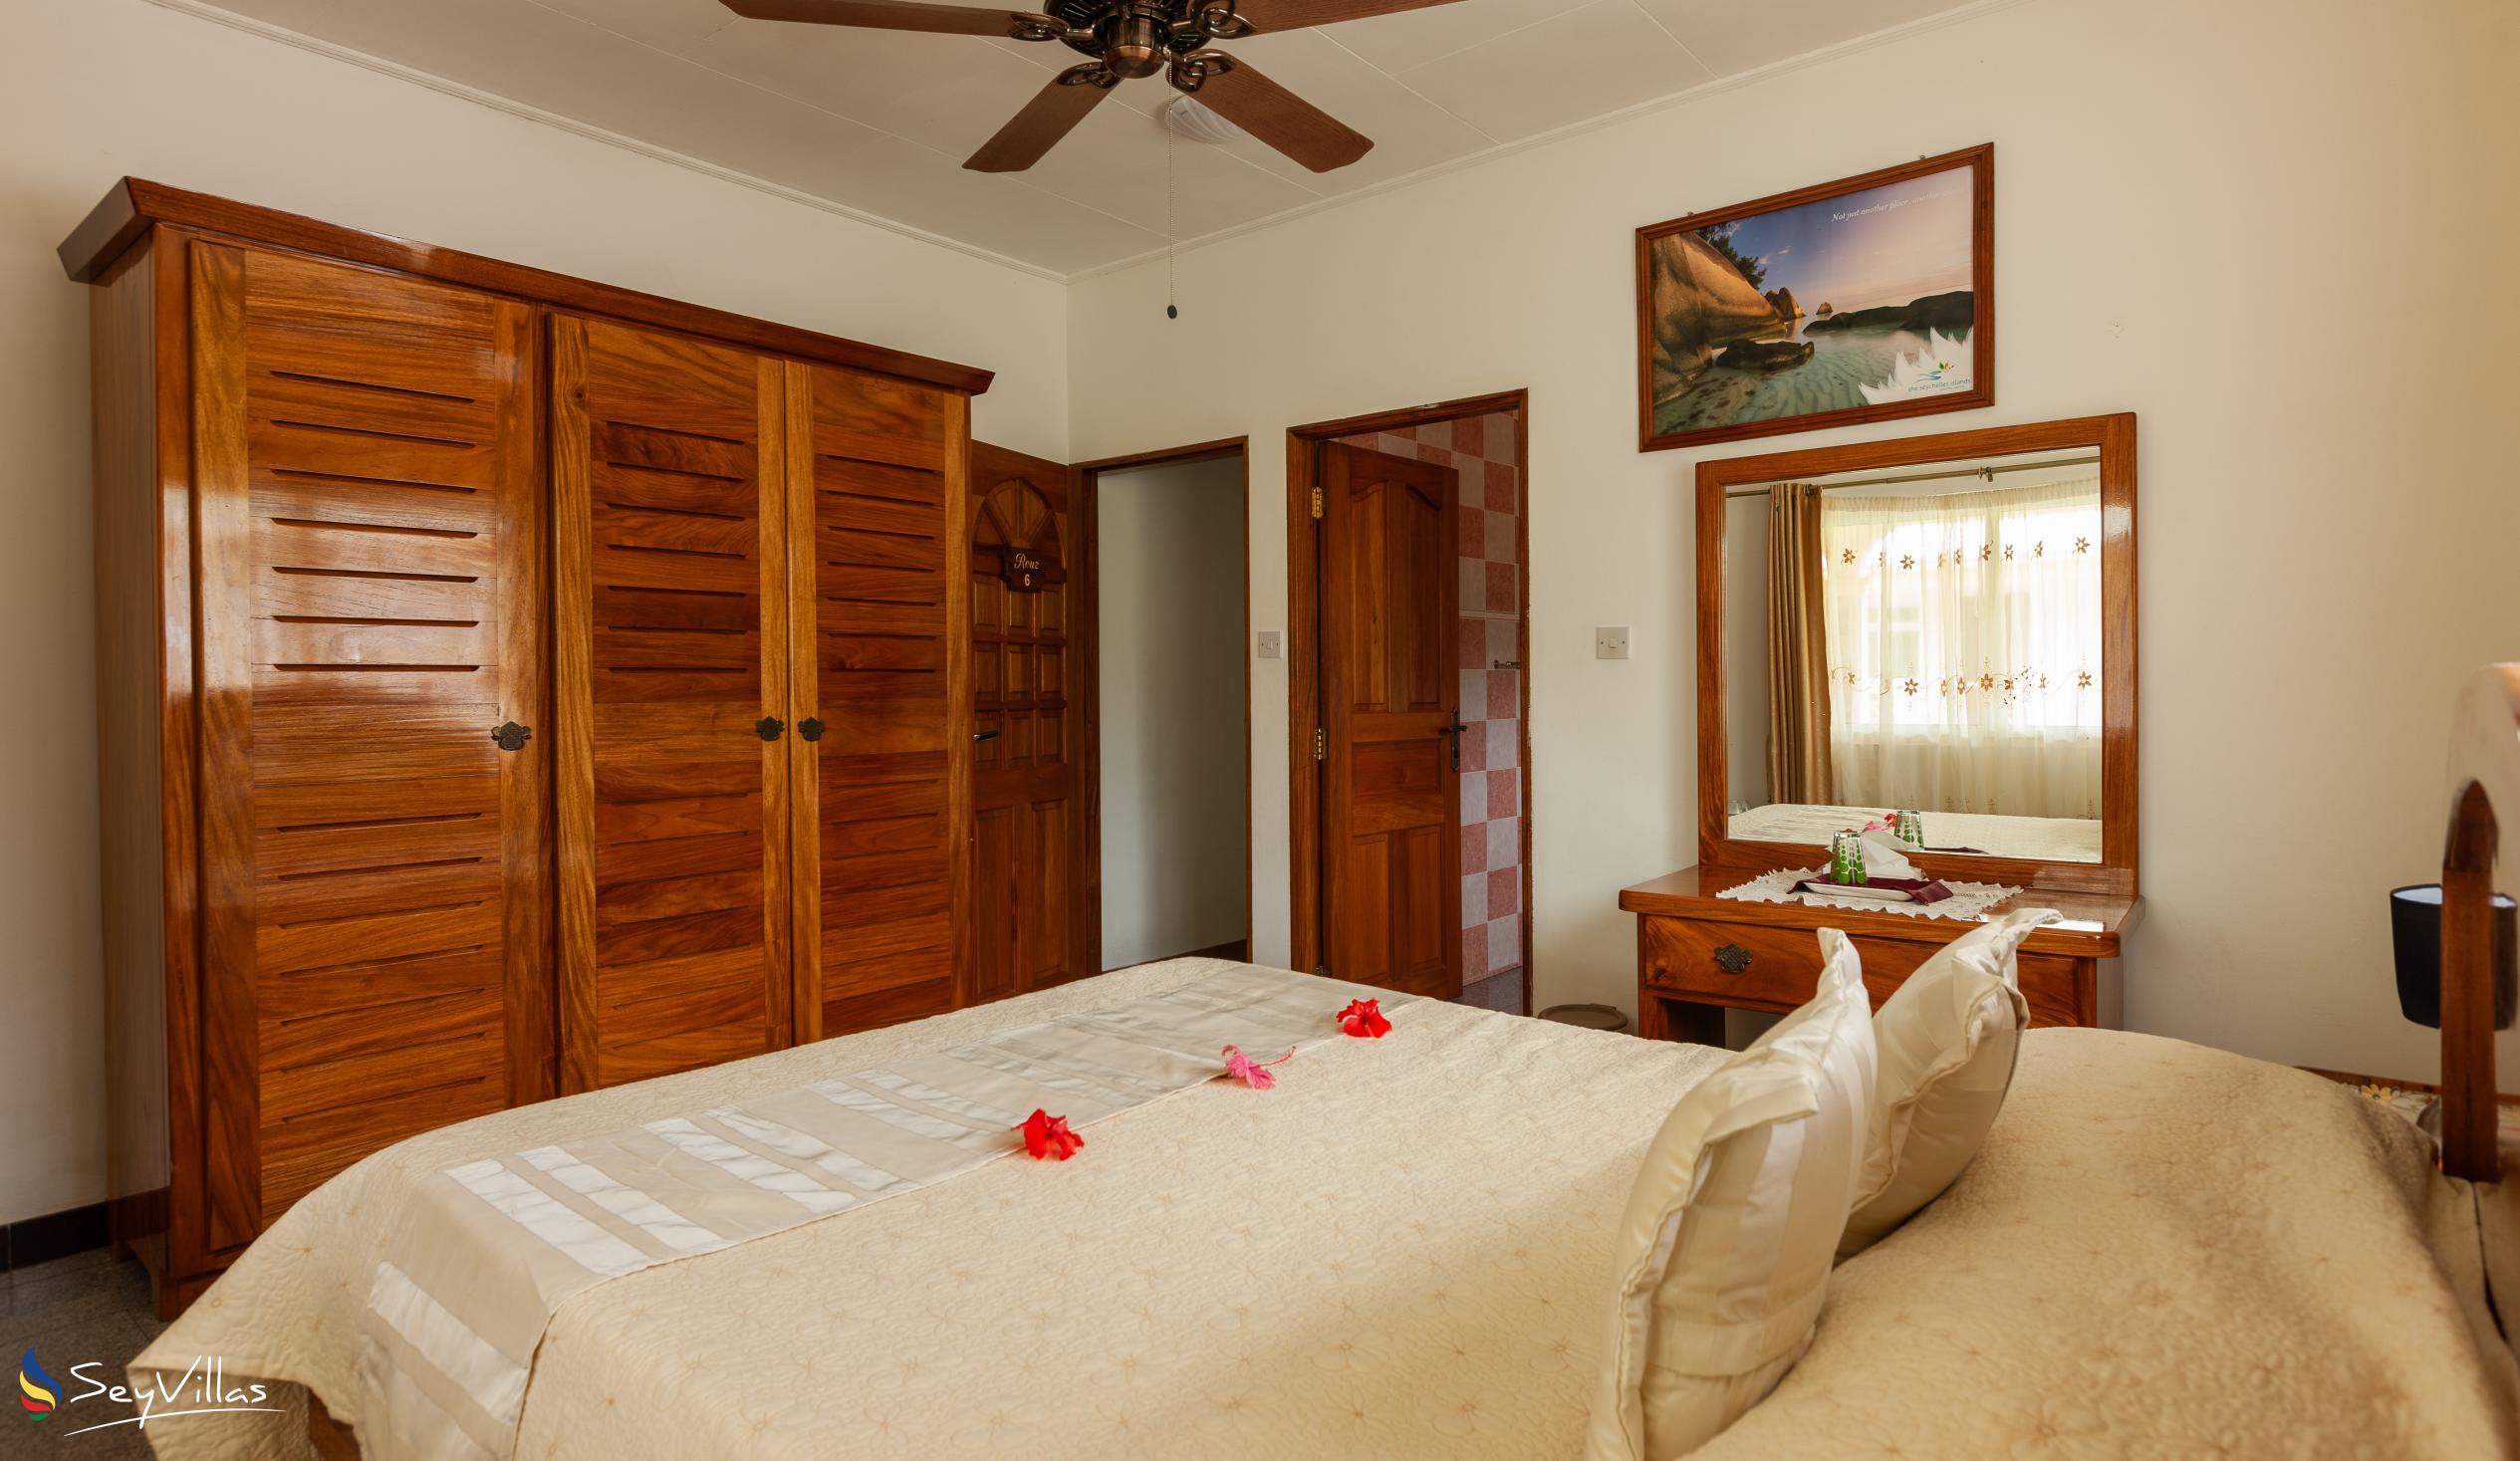 Photo 124: Villa Bananier - Superior Room - Praslin (Seychelles)